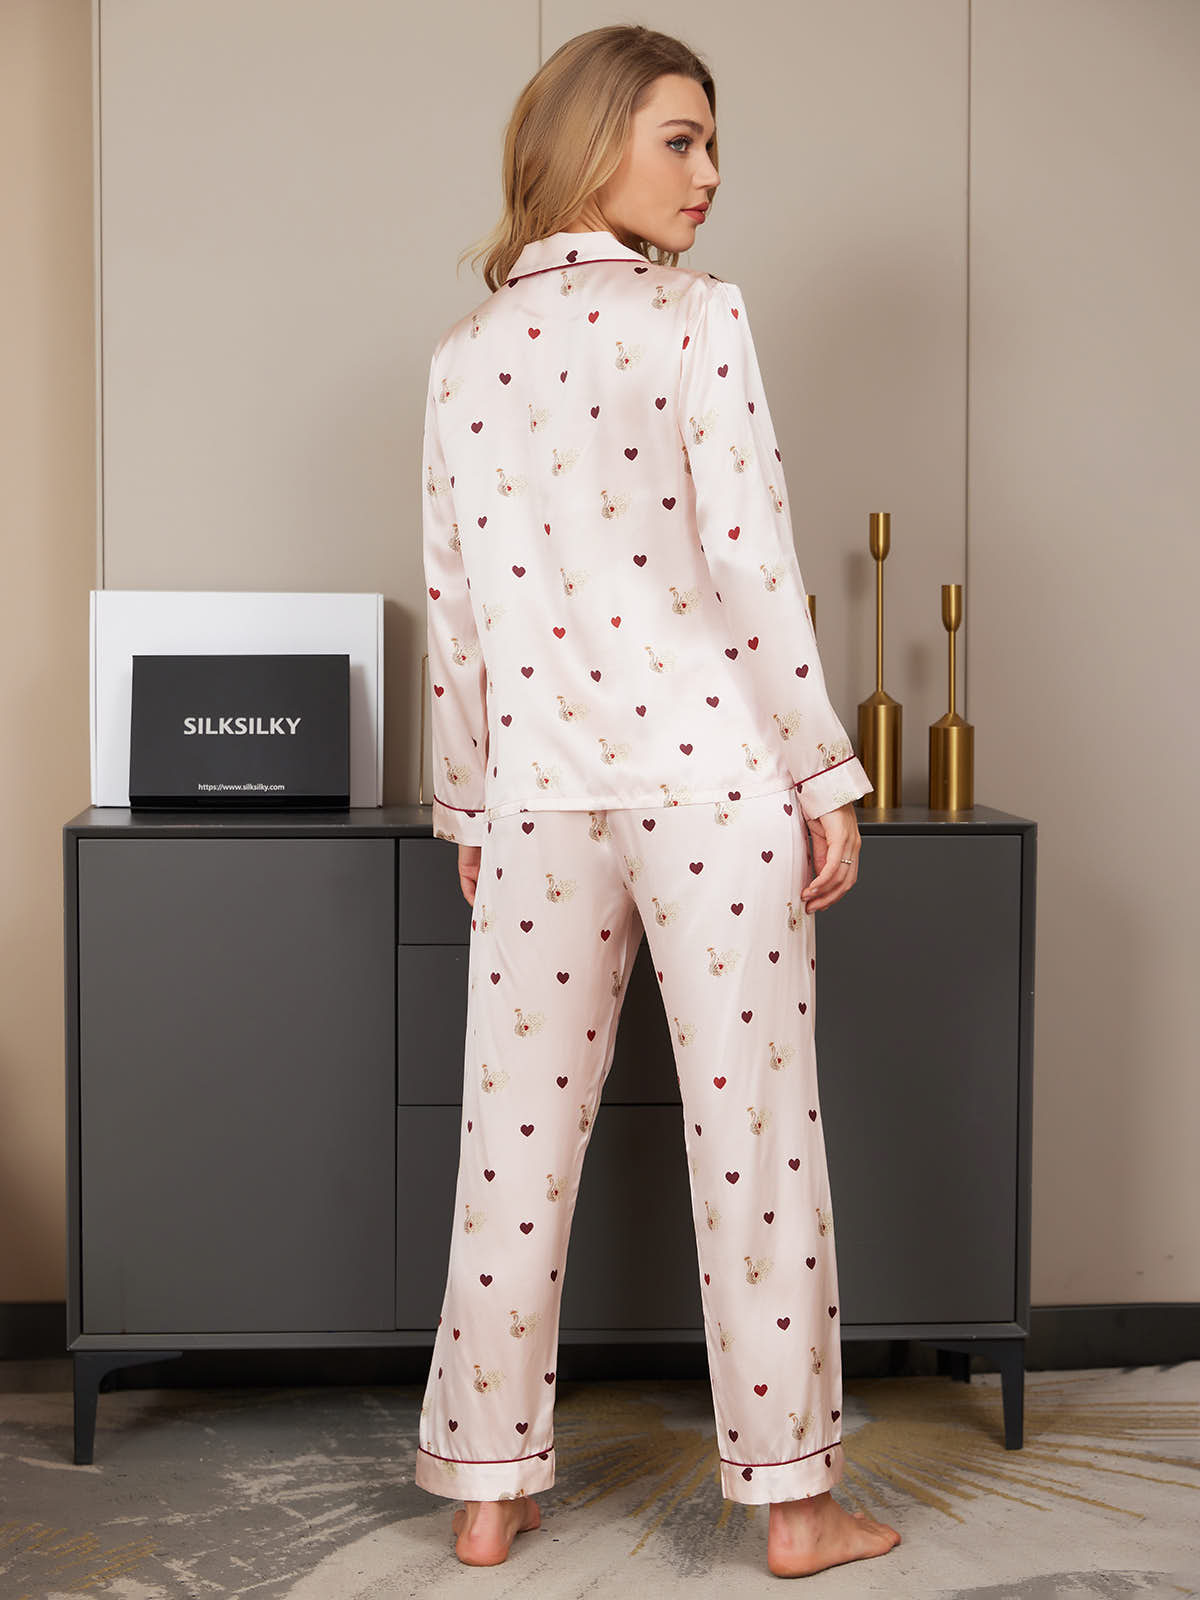 Margret - Sily Pyjama set - CUTE HEARTS